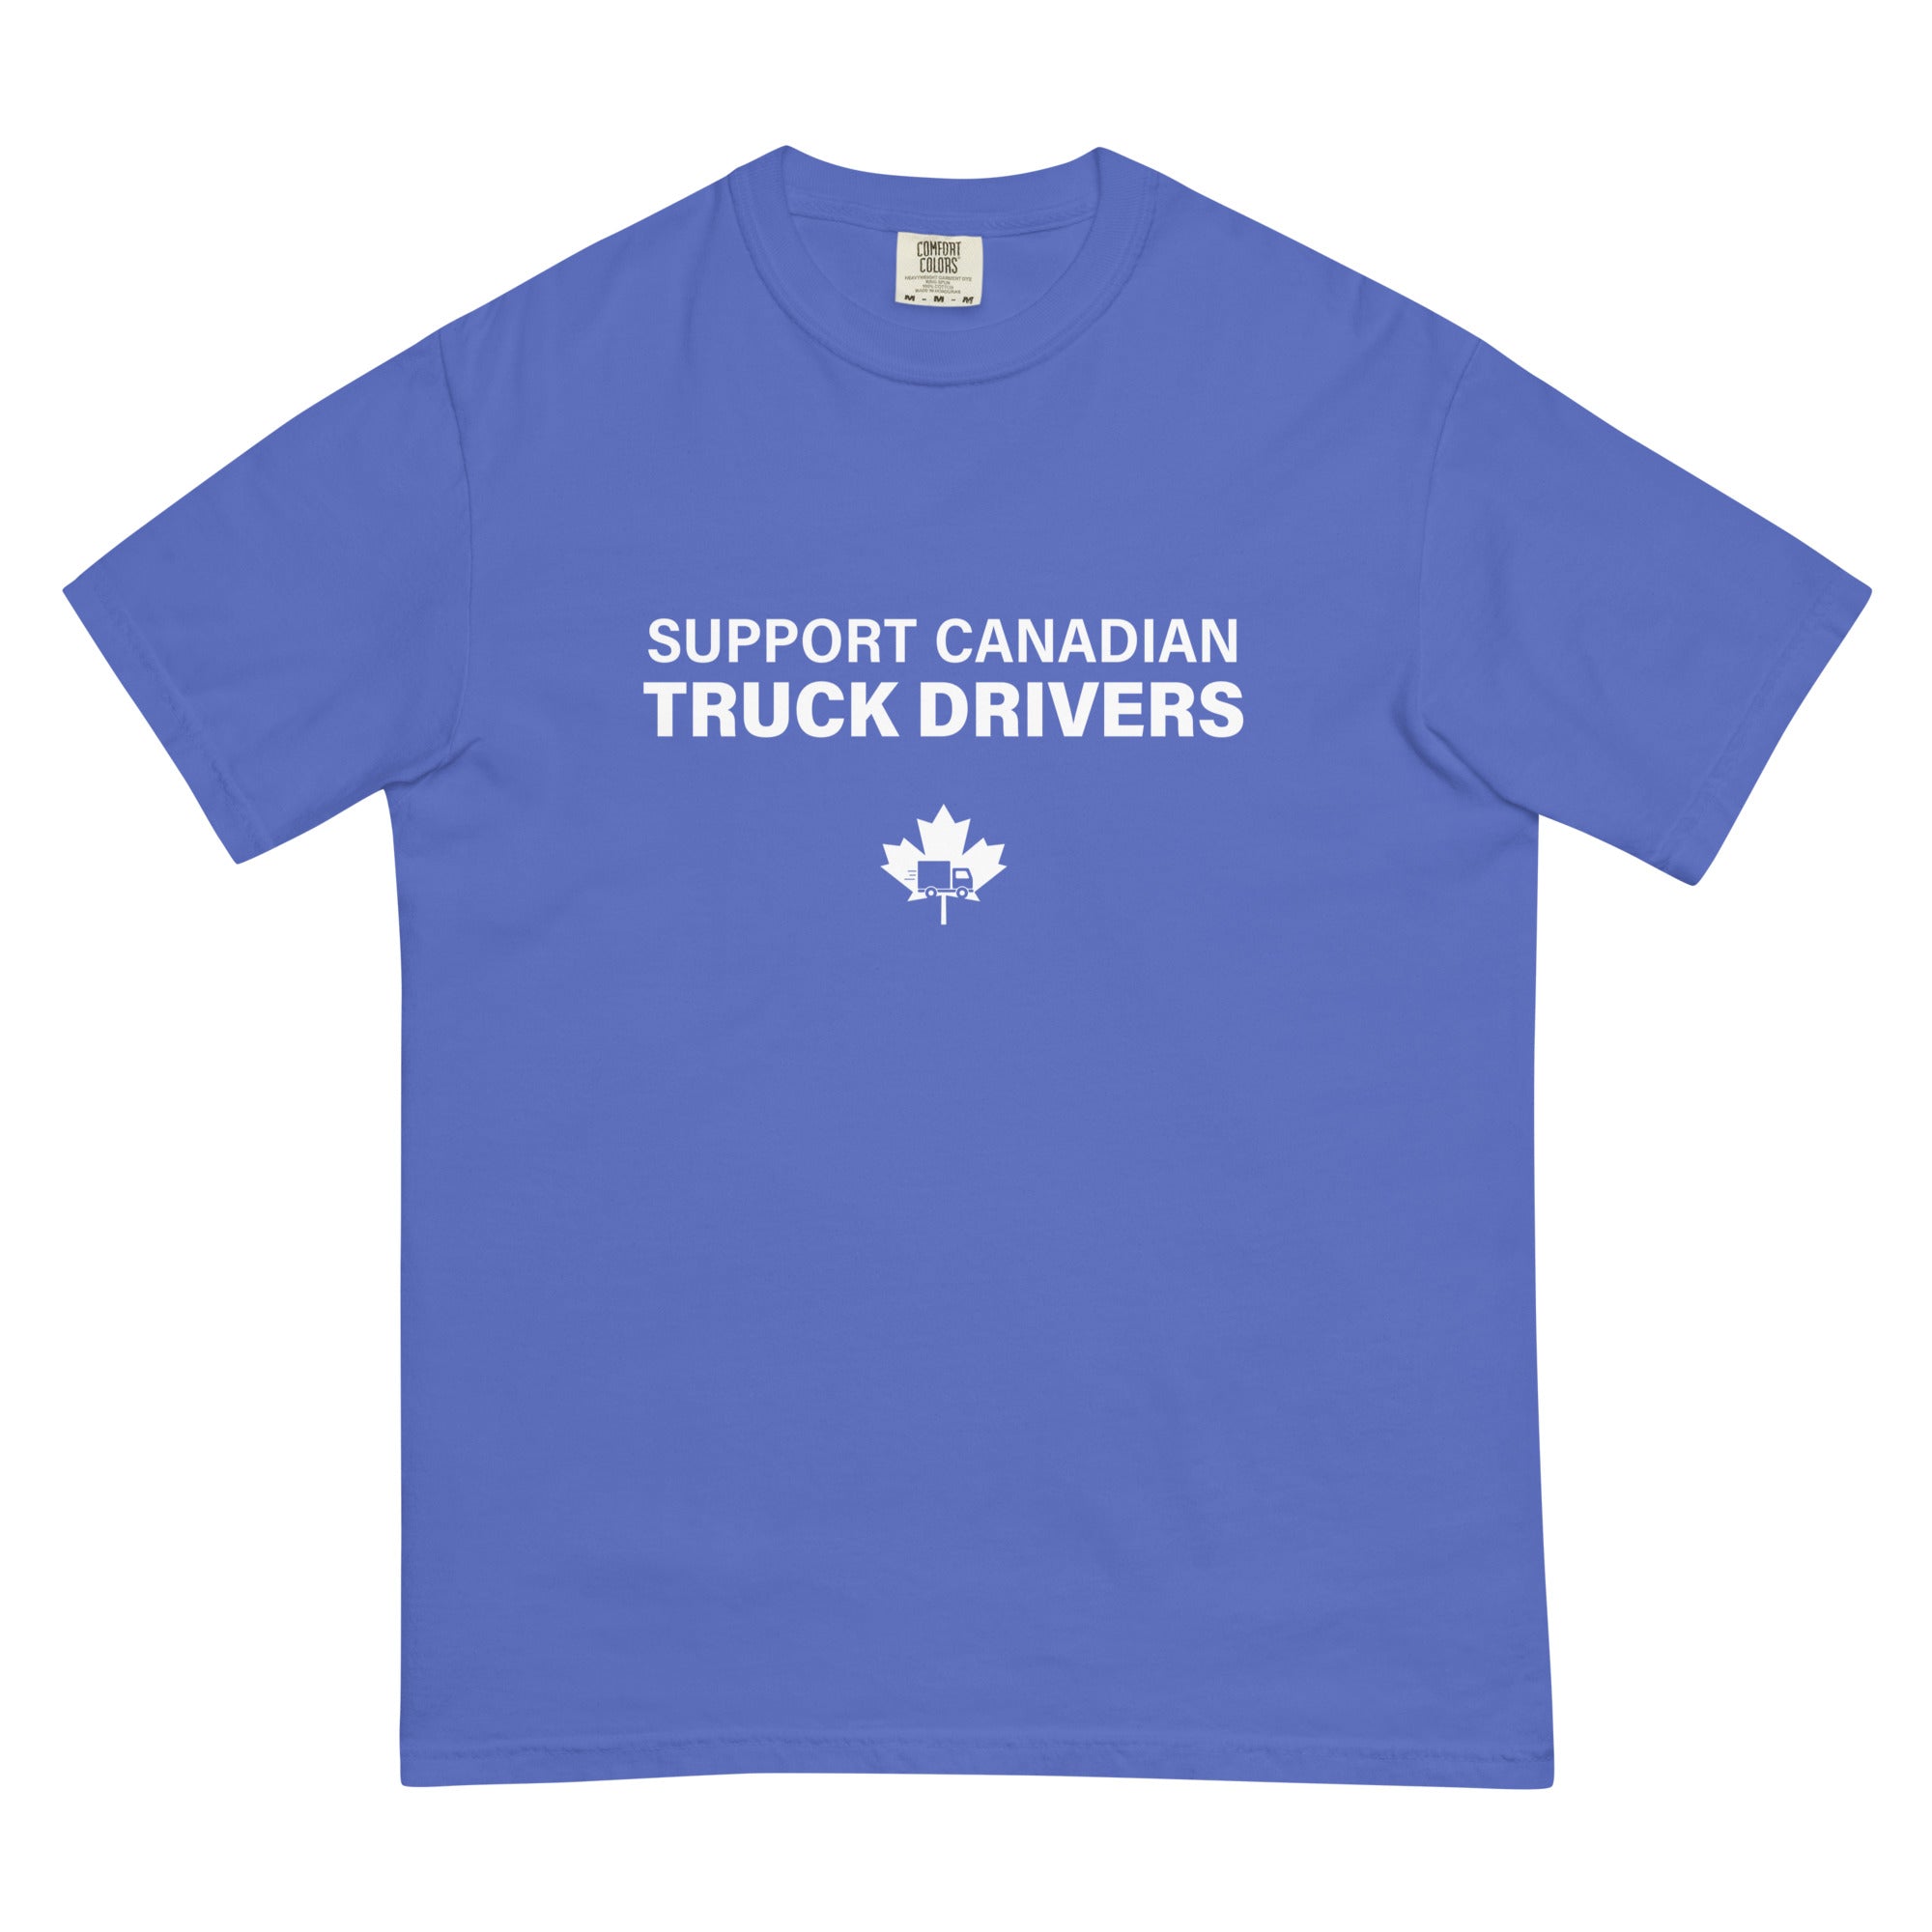 Men's "Support Canadian Truck Drivers" T-shirt